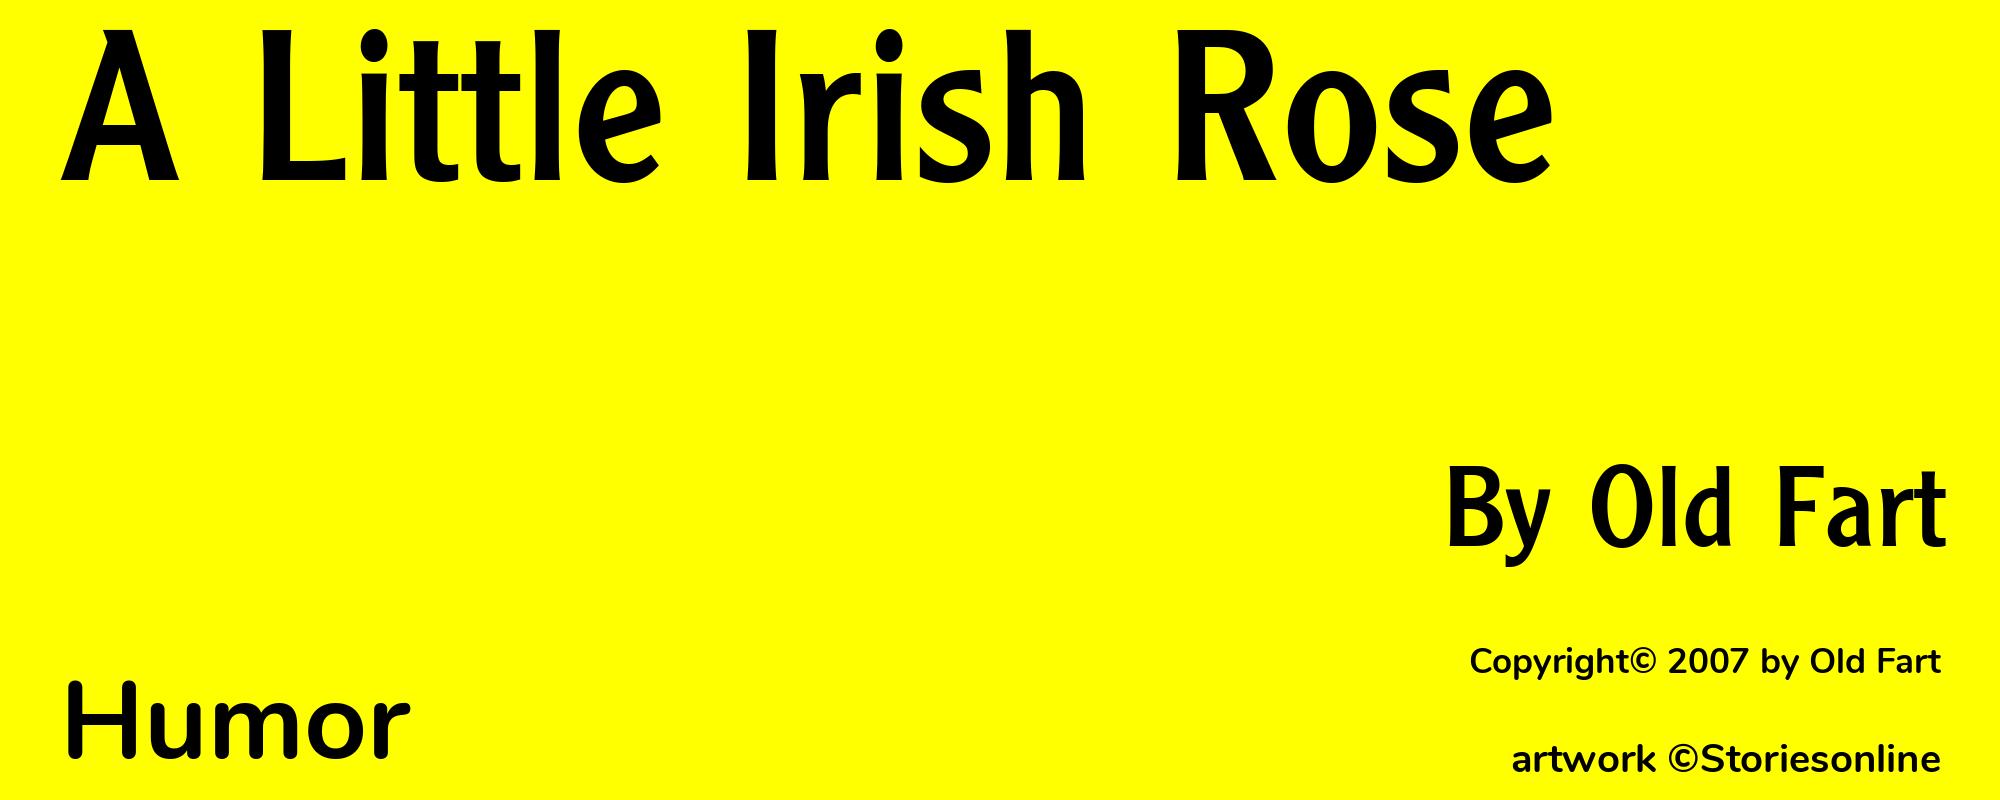 A Little Irish Rose - Cover